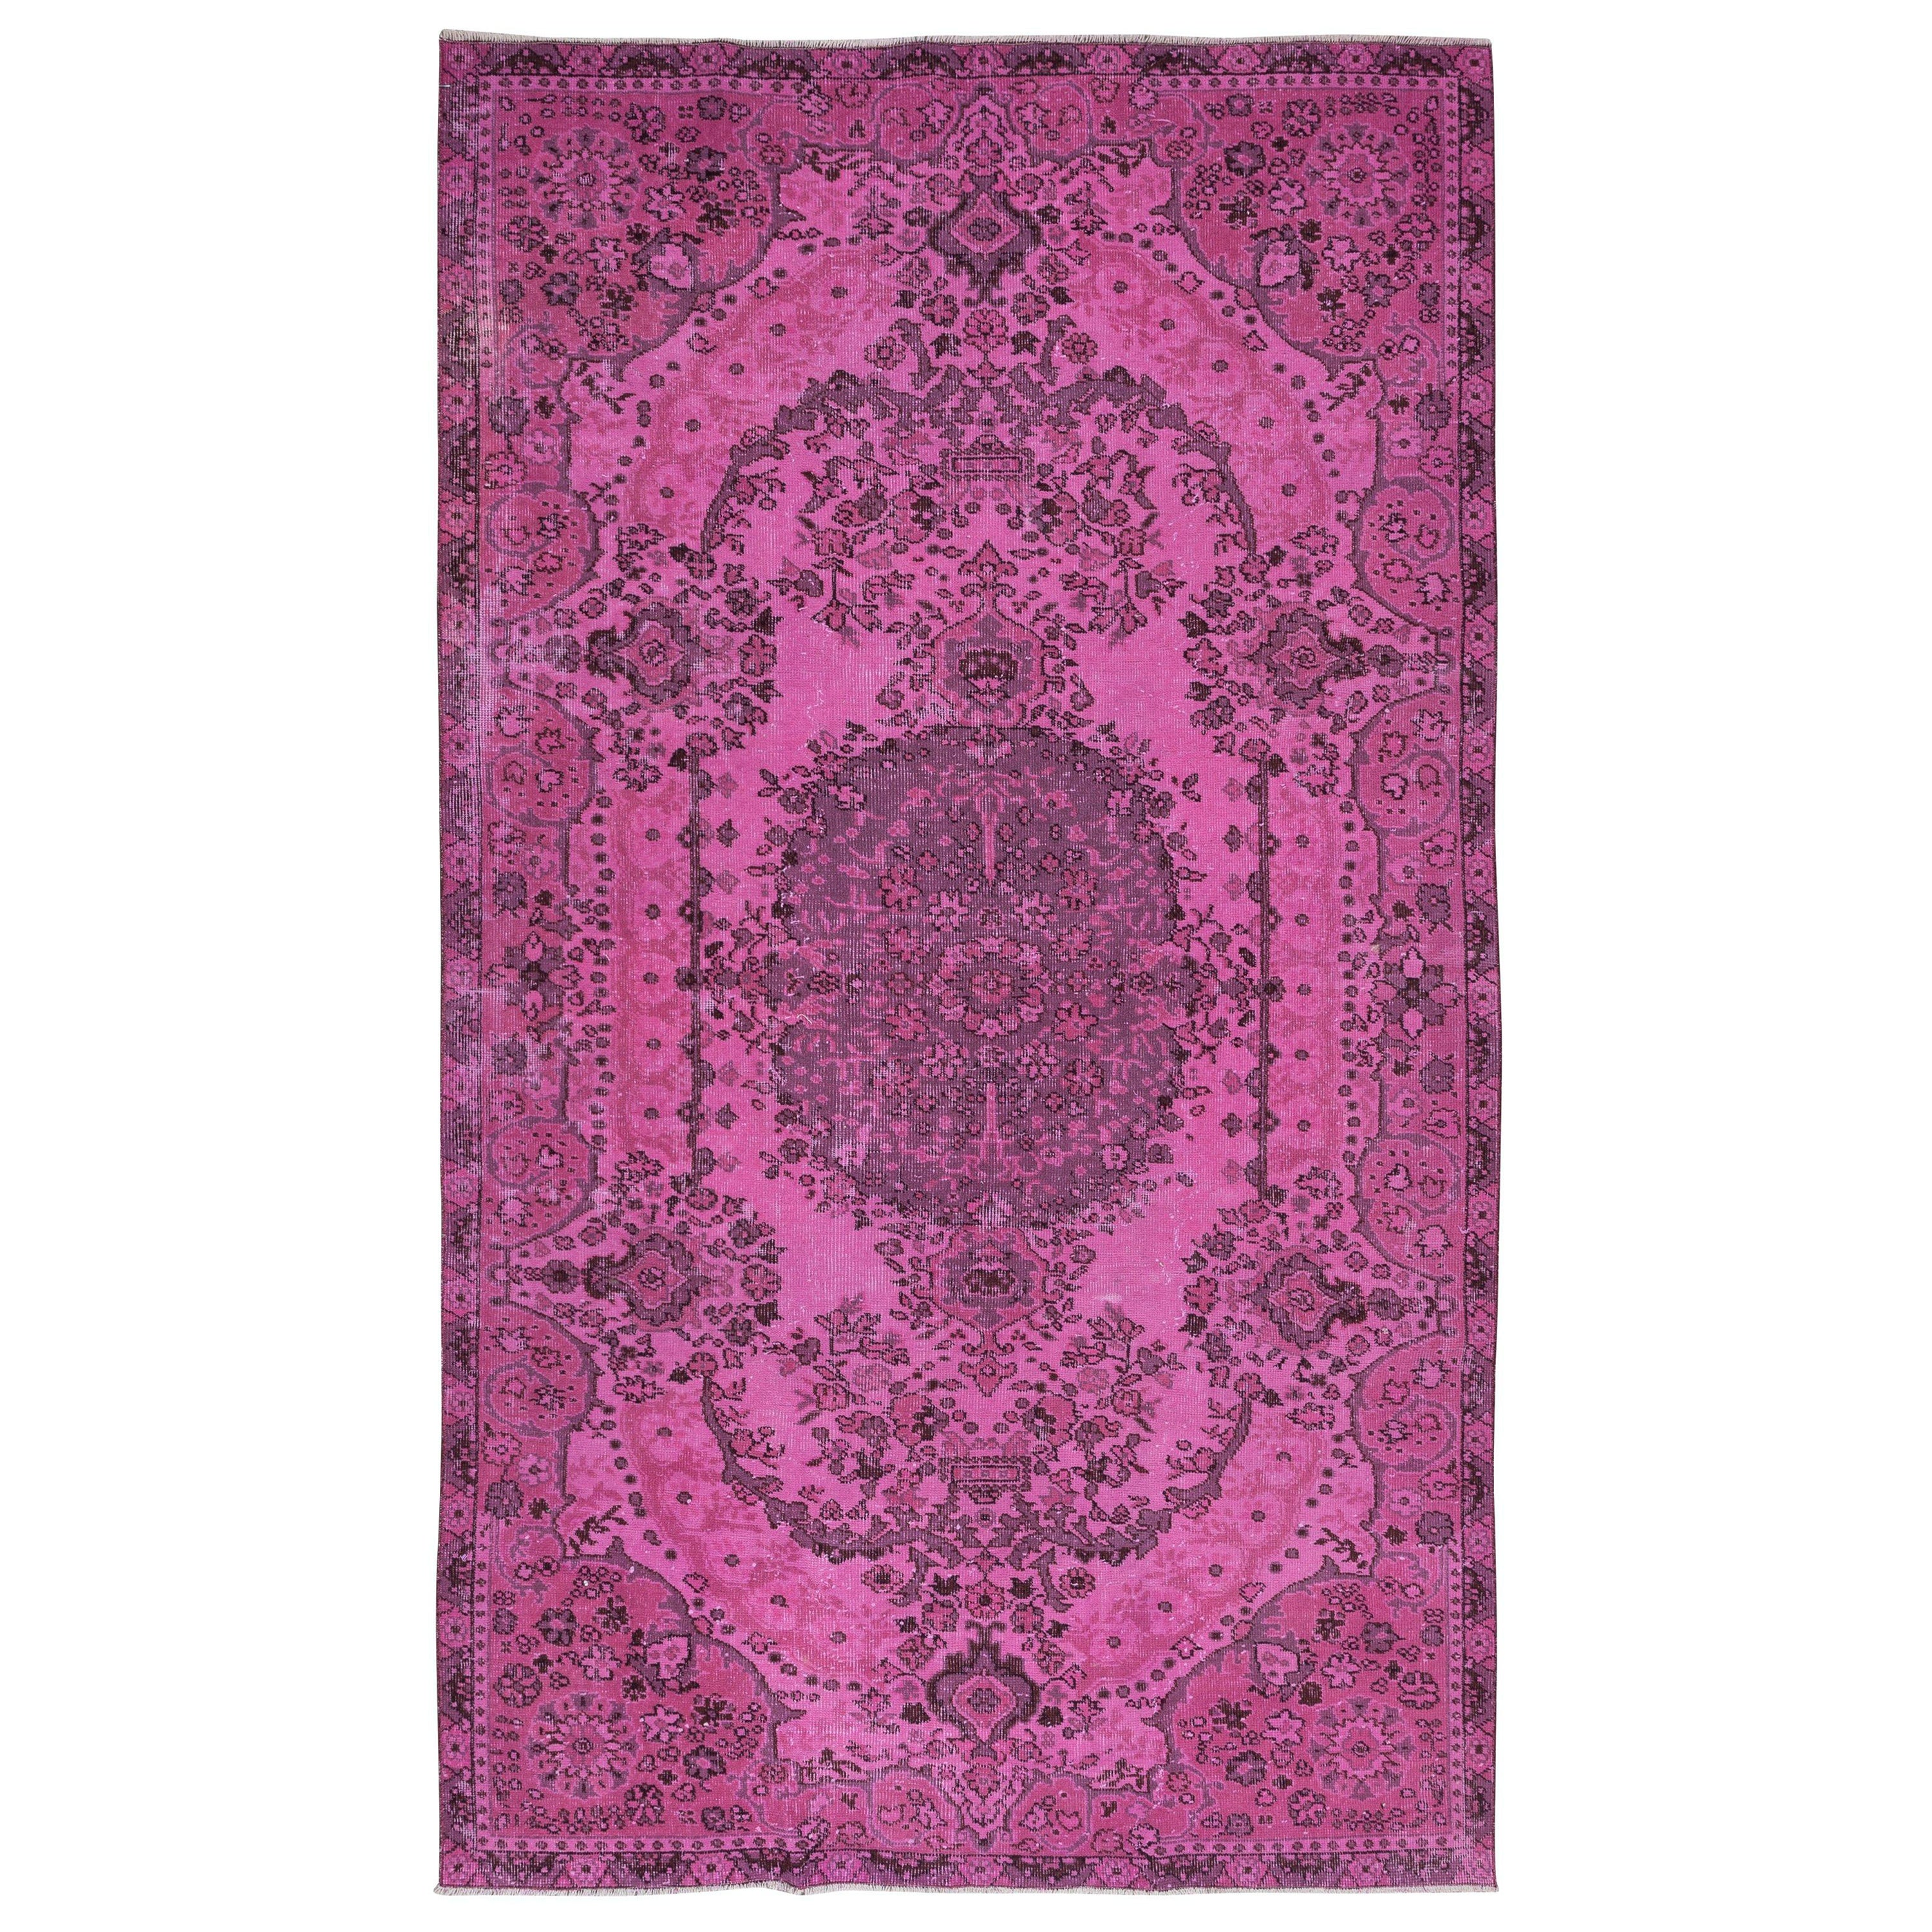 5.6x9.2 Ft Unique Turkish Rug in Pink, Handmade Modern Carpet, Floor Covering For Sale